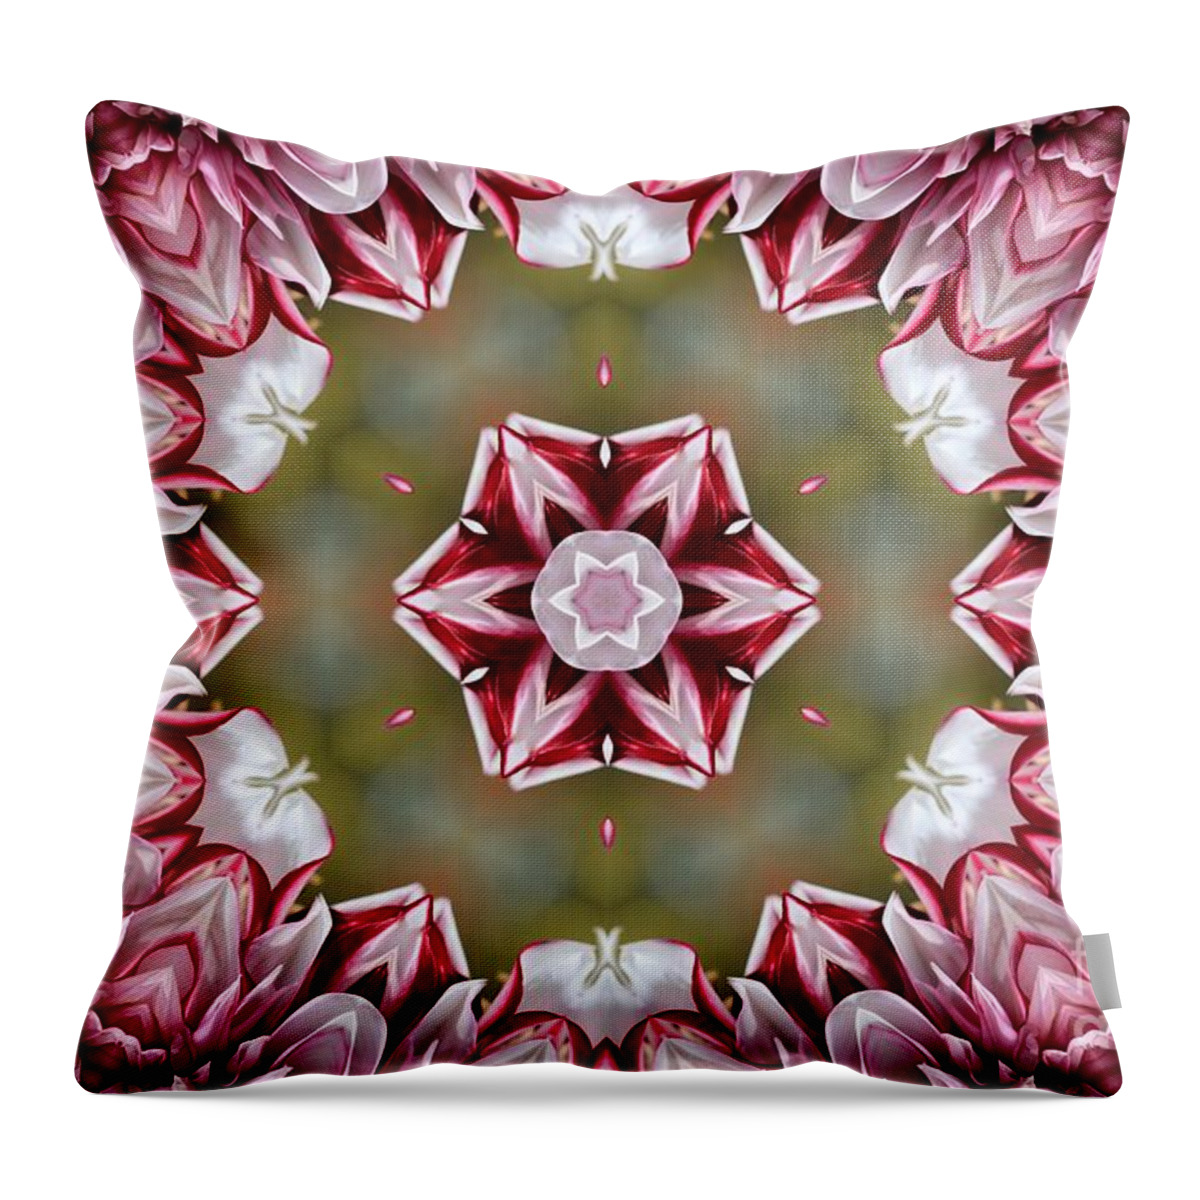 Mccombie Throw Pillow featuring the digital art Tartan Mandala #3 by J McCombie